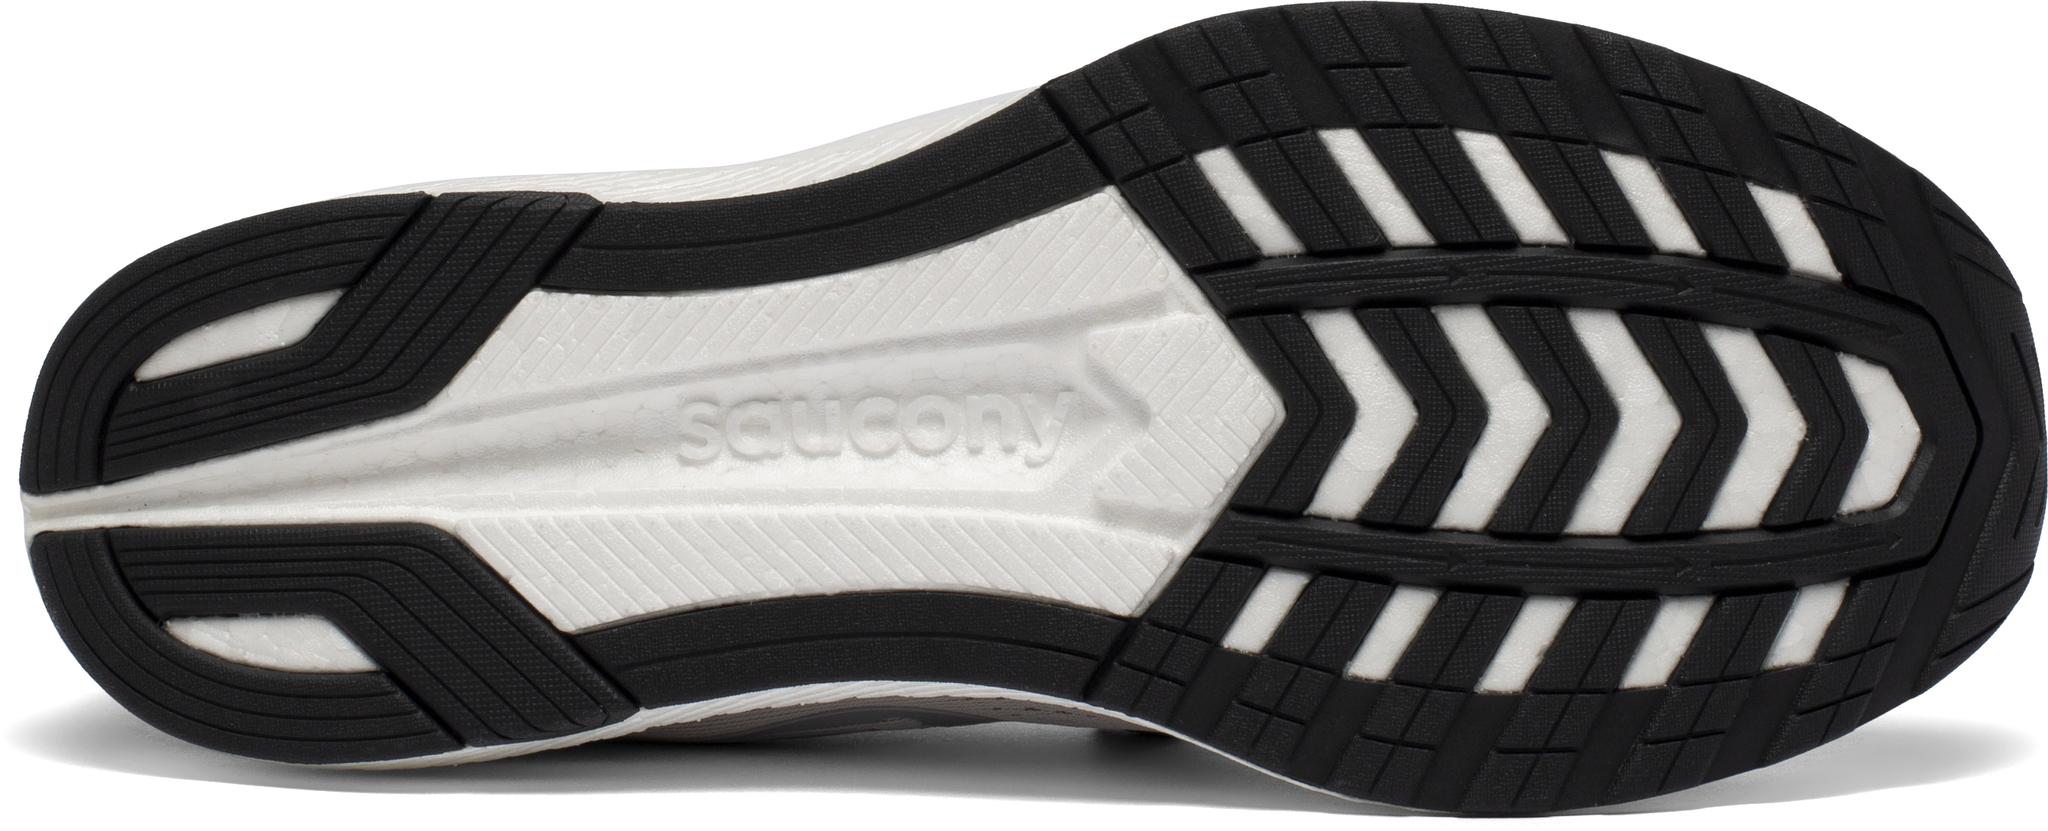 Saucony Men's Freedom 4 Running Shoe - Stone/Alloy